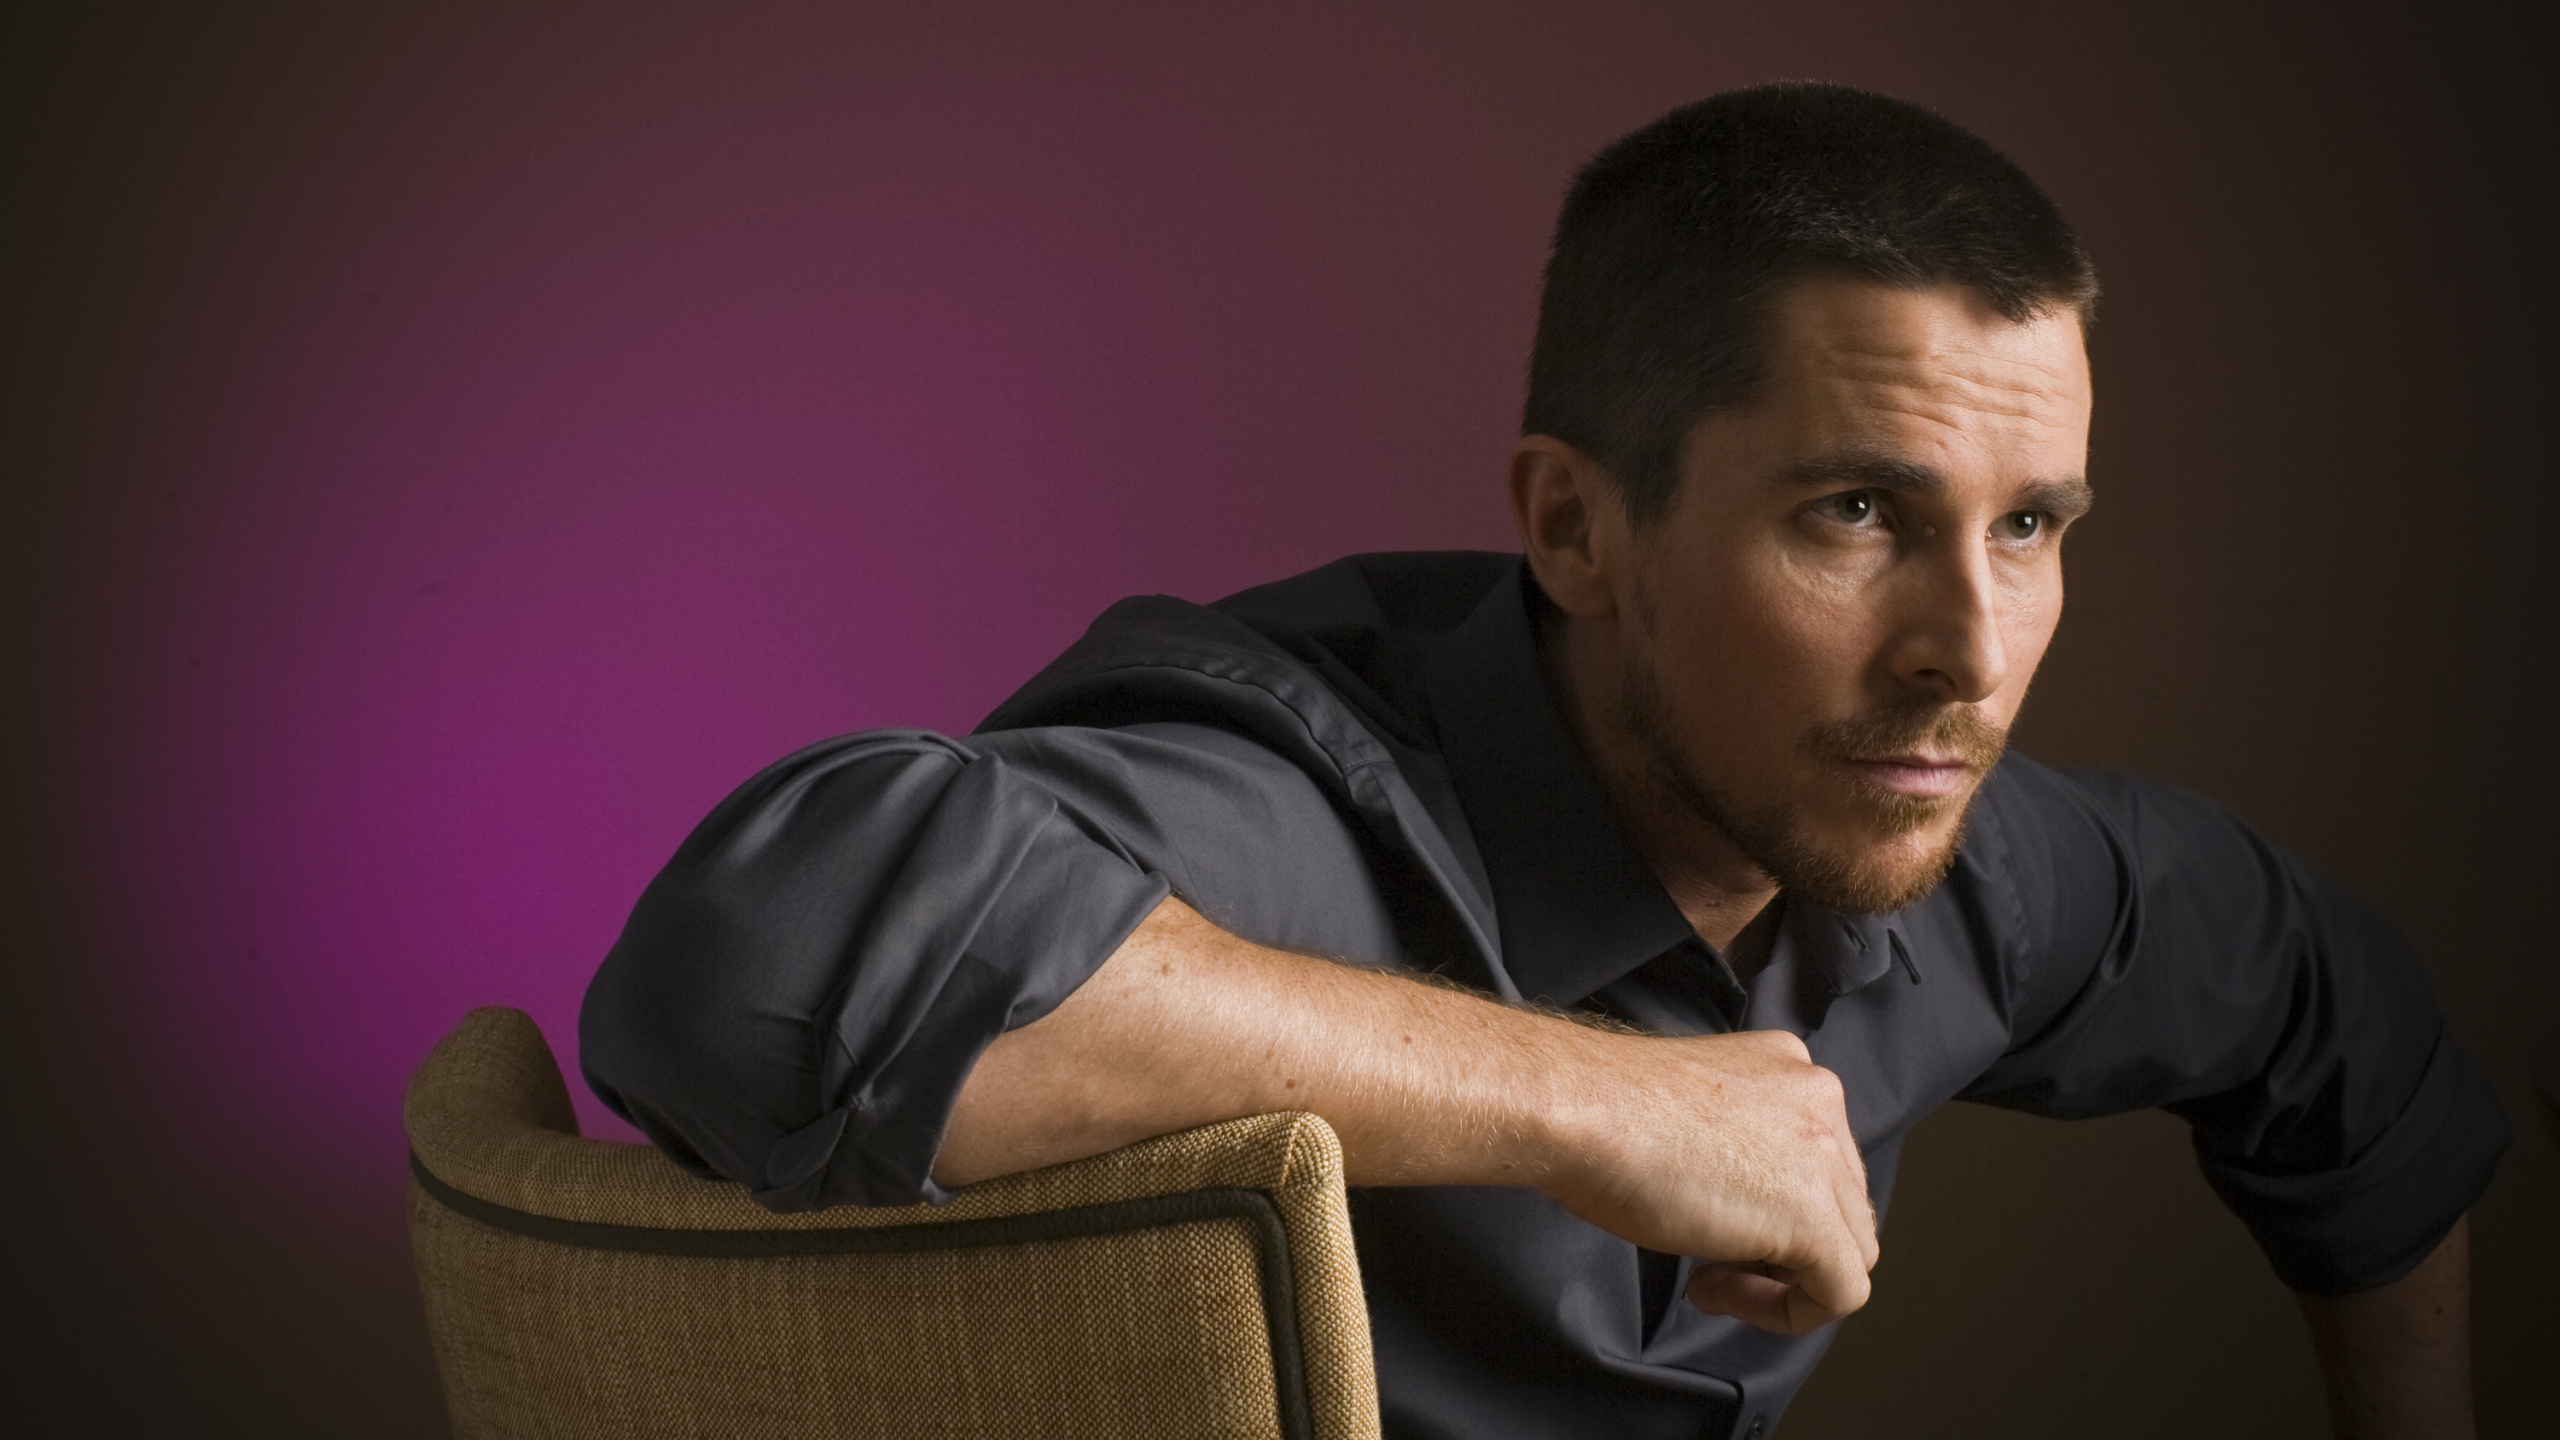 Christian Bale, Sitting, Human, Portrait, Man. Wallpaper in 2560x1440 Resolution